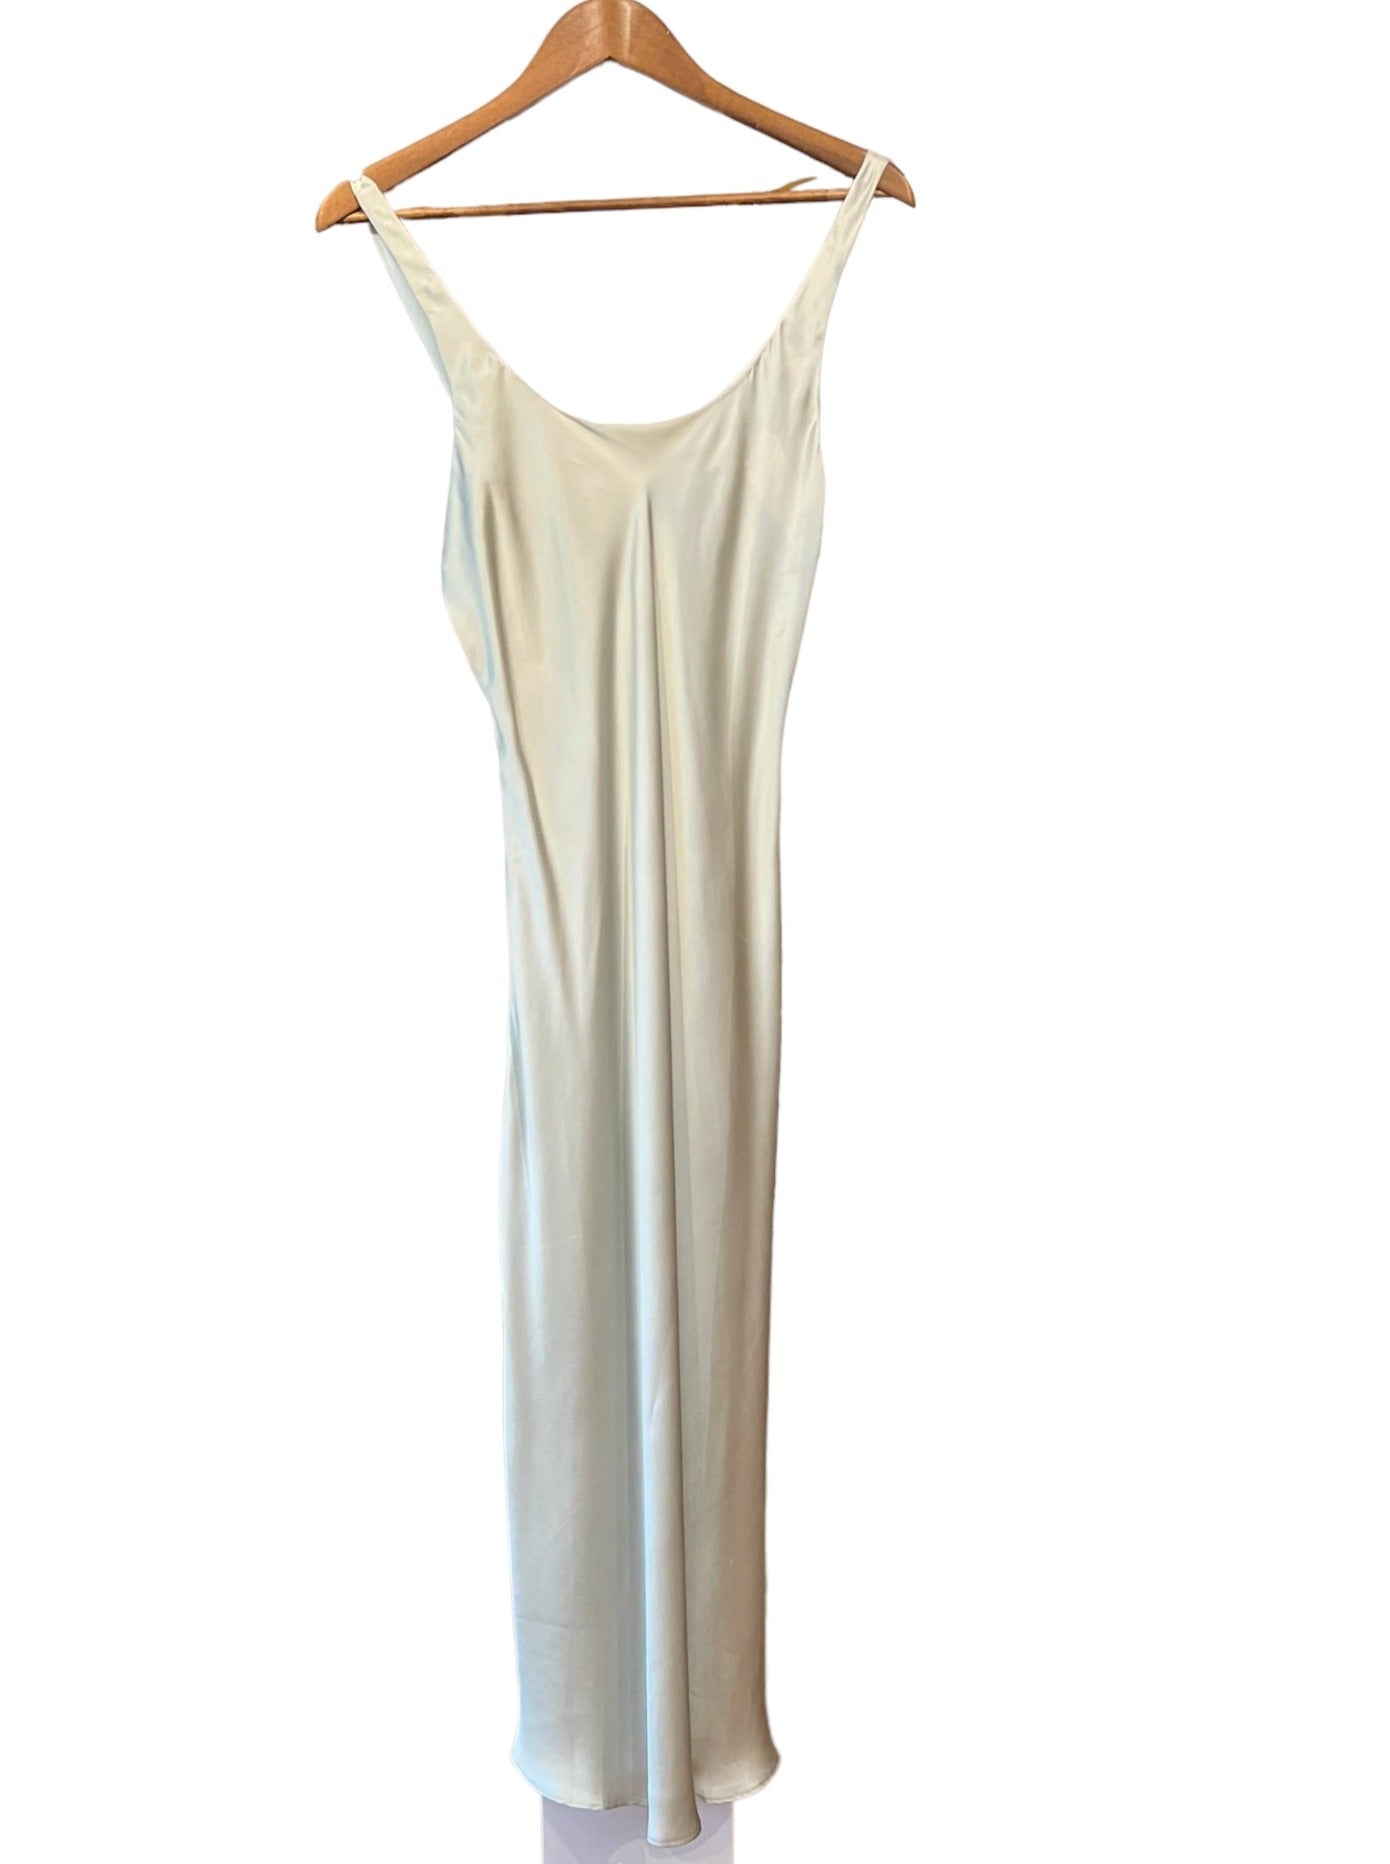 sage silk slip dress mint green thick tank straps midi length 100% silk vintage find